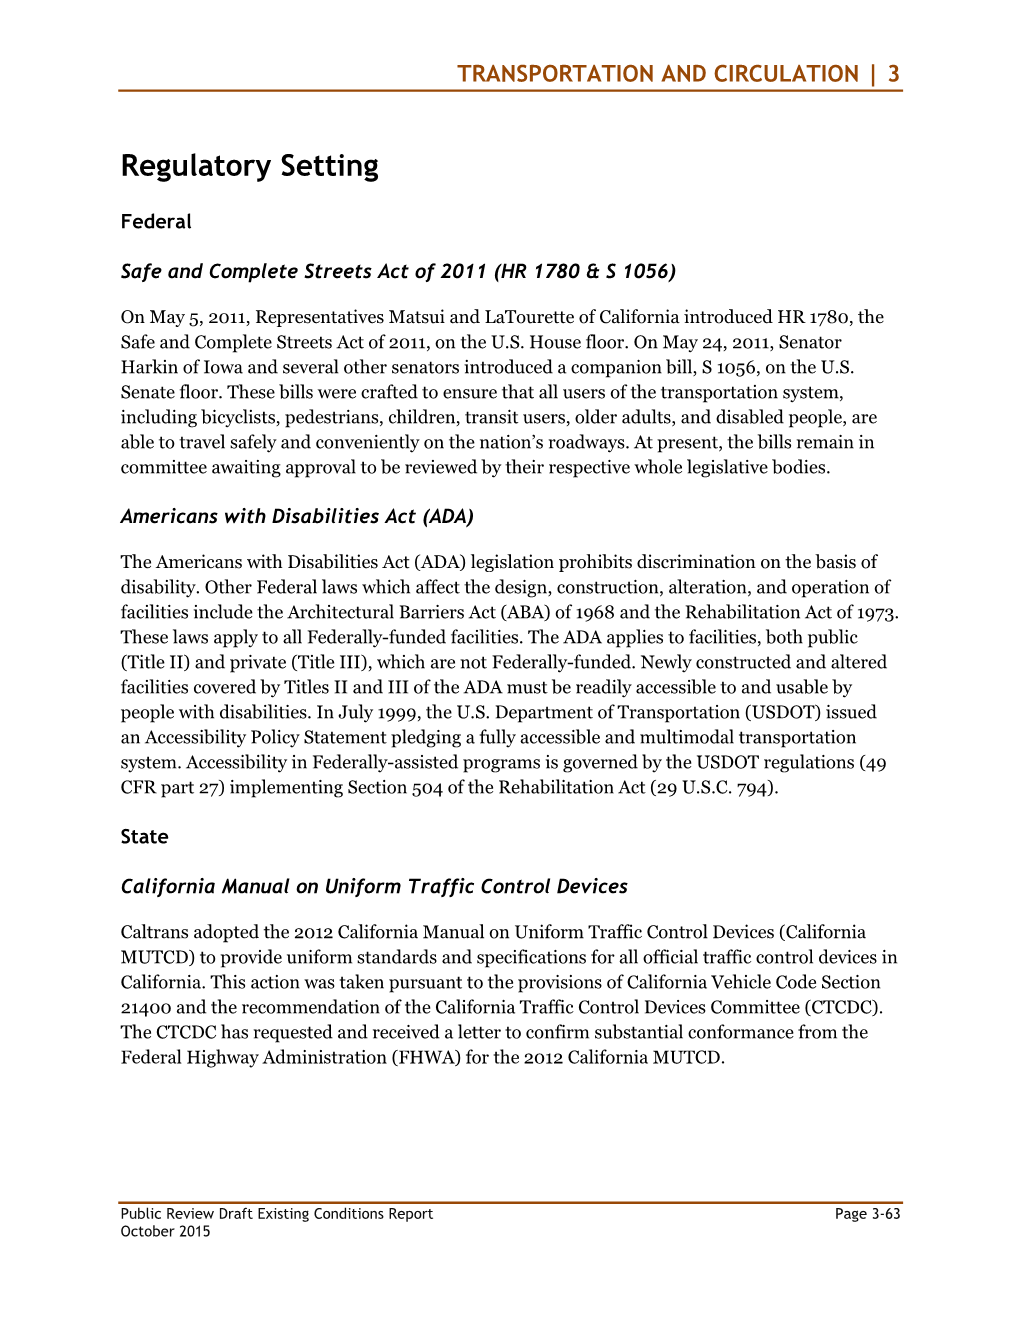 Regulatory Setting